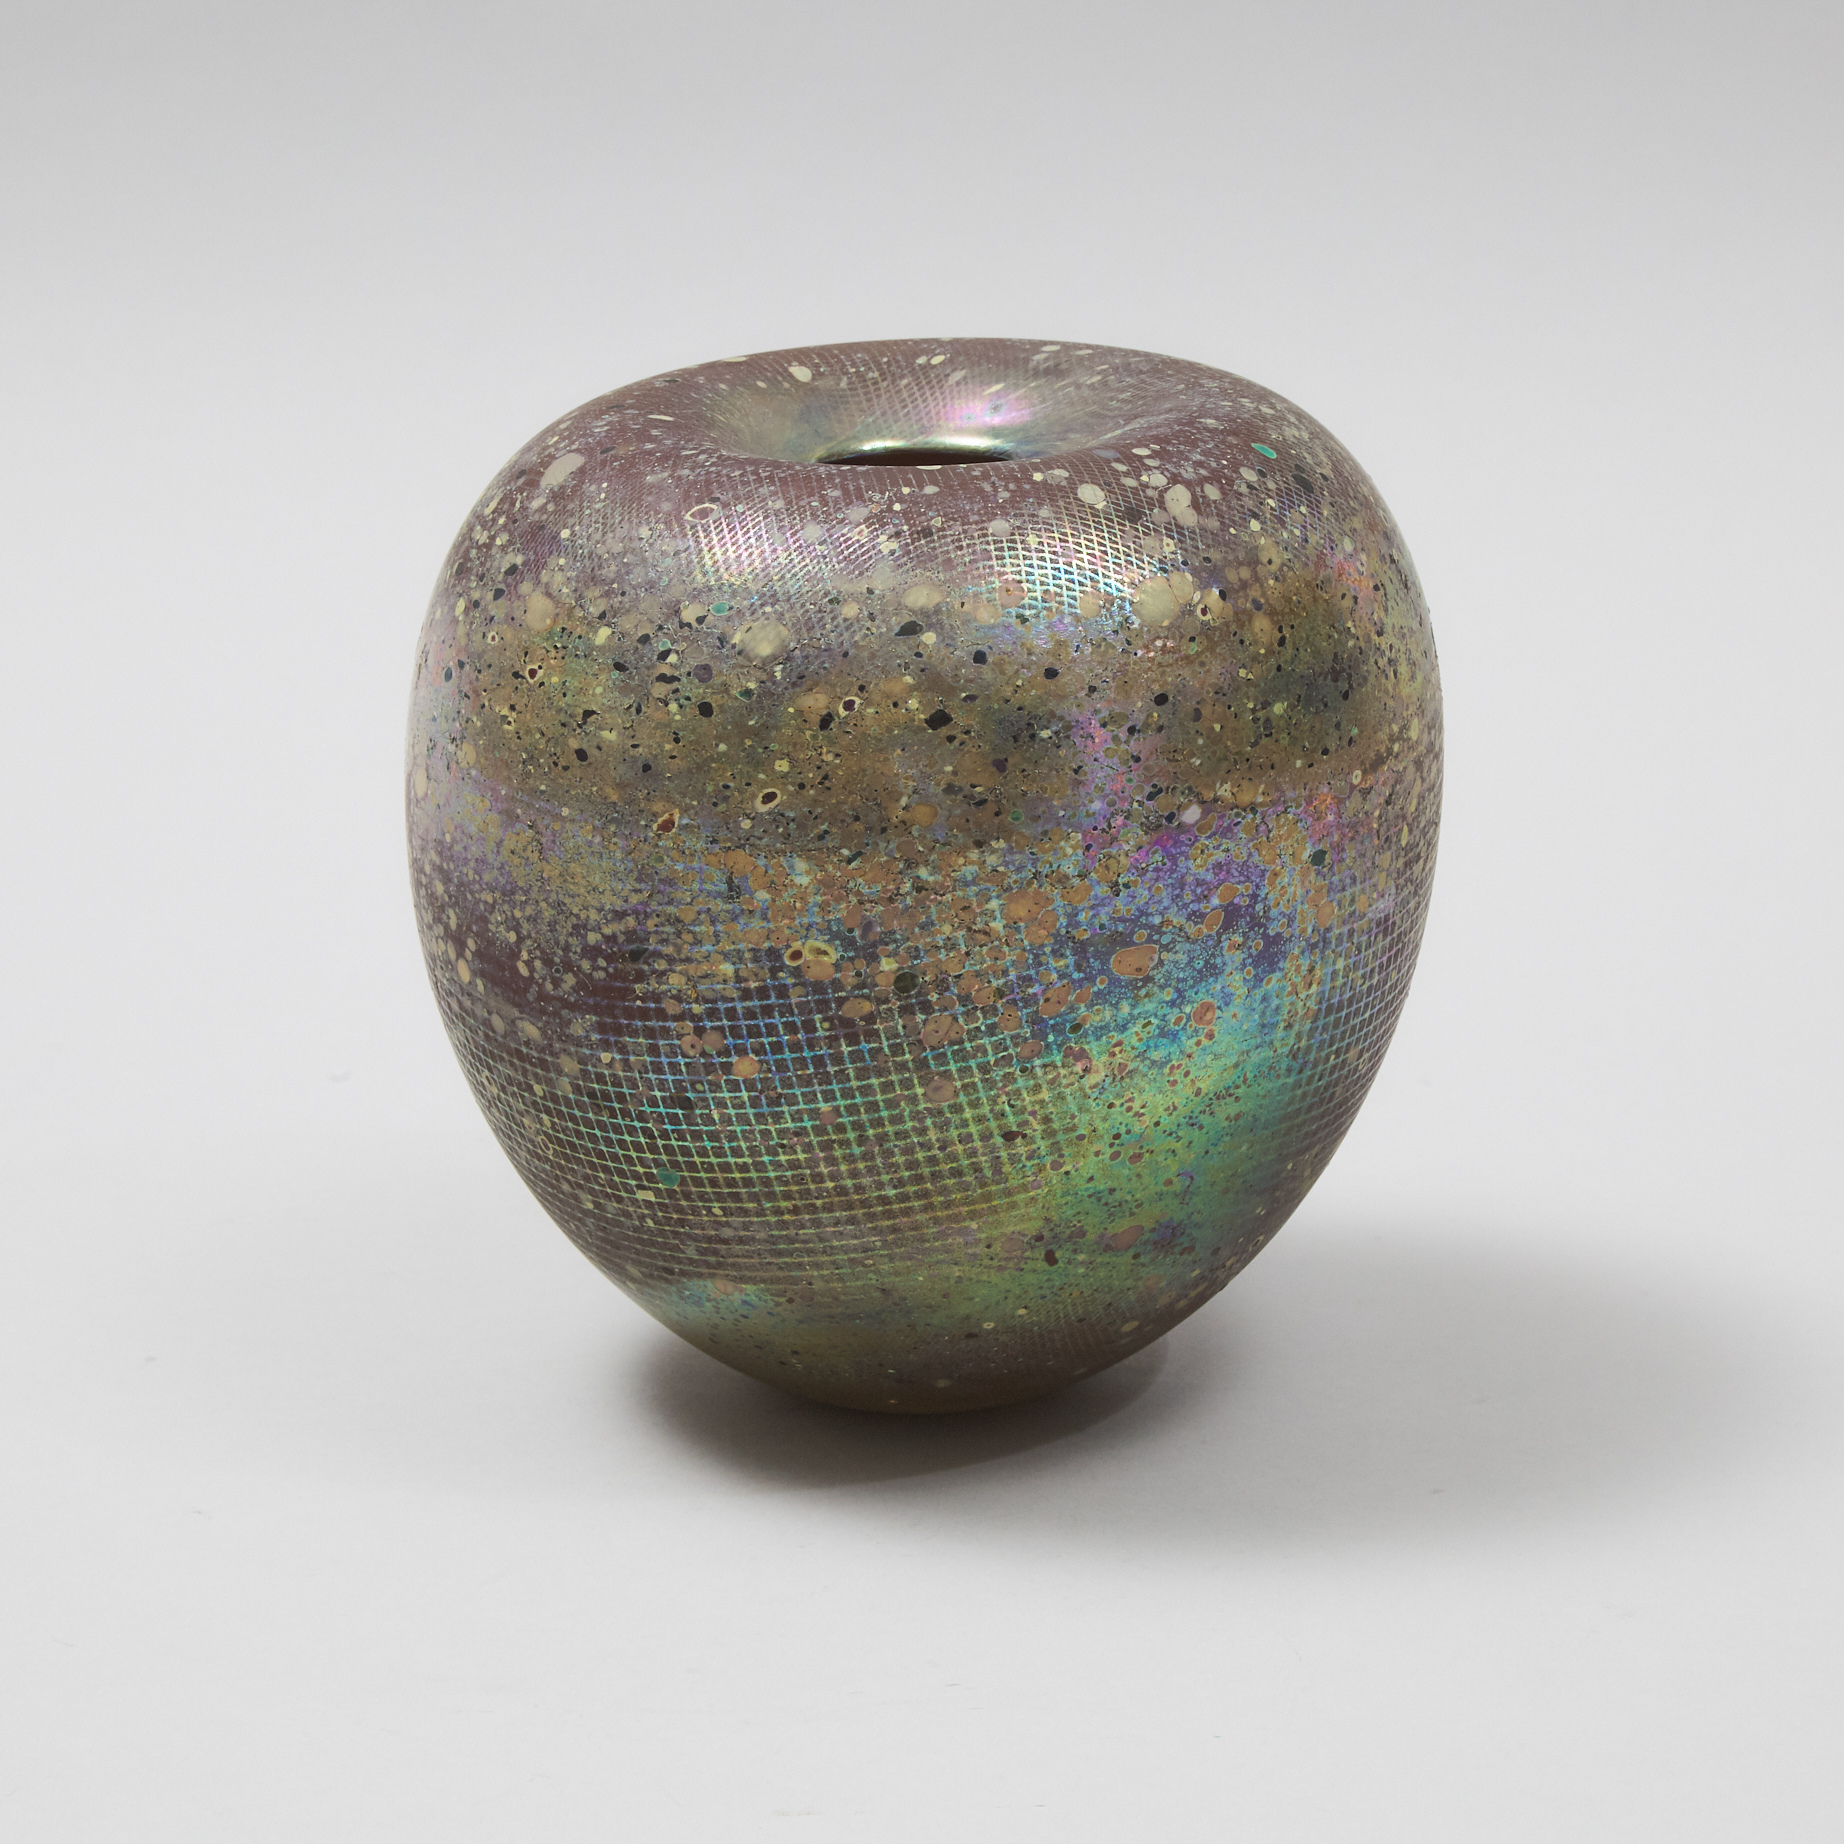 Daniel Crichton (Canadian, 1950-2002), Iridescent Glass Vase, 1981